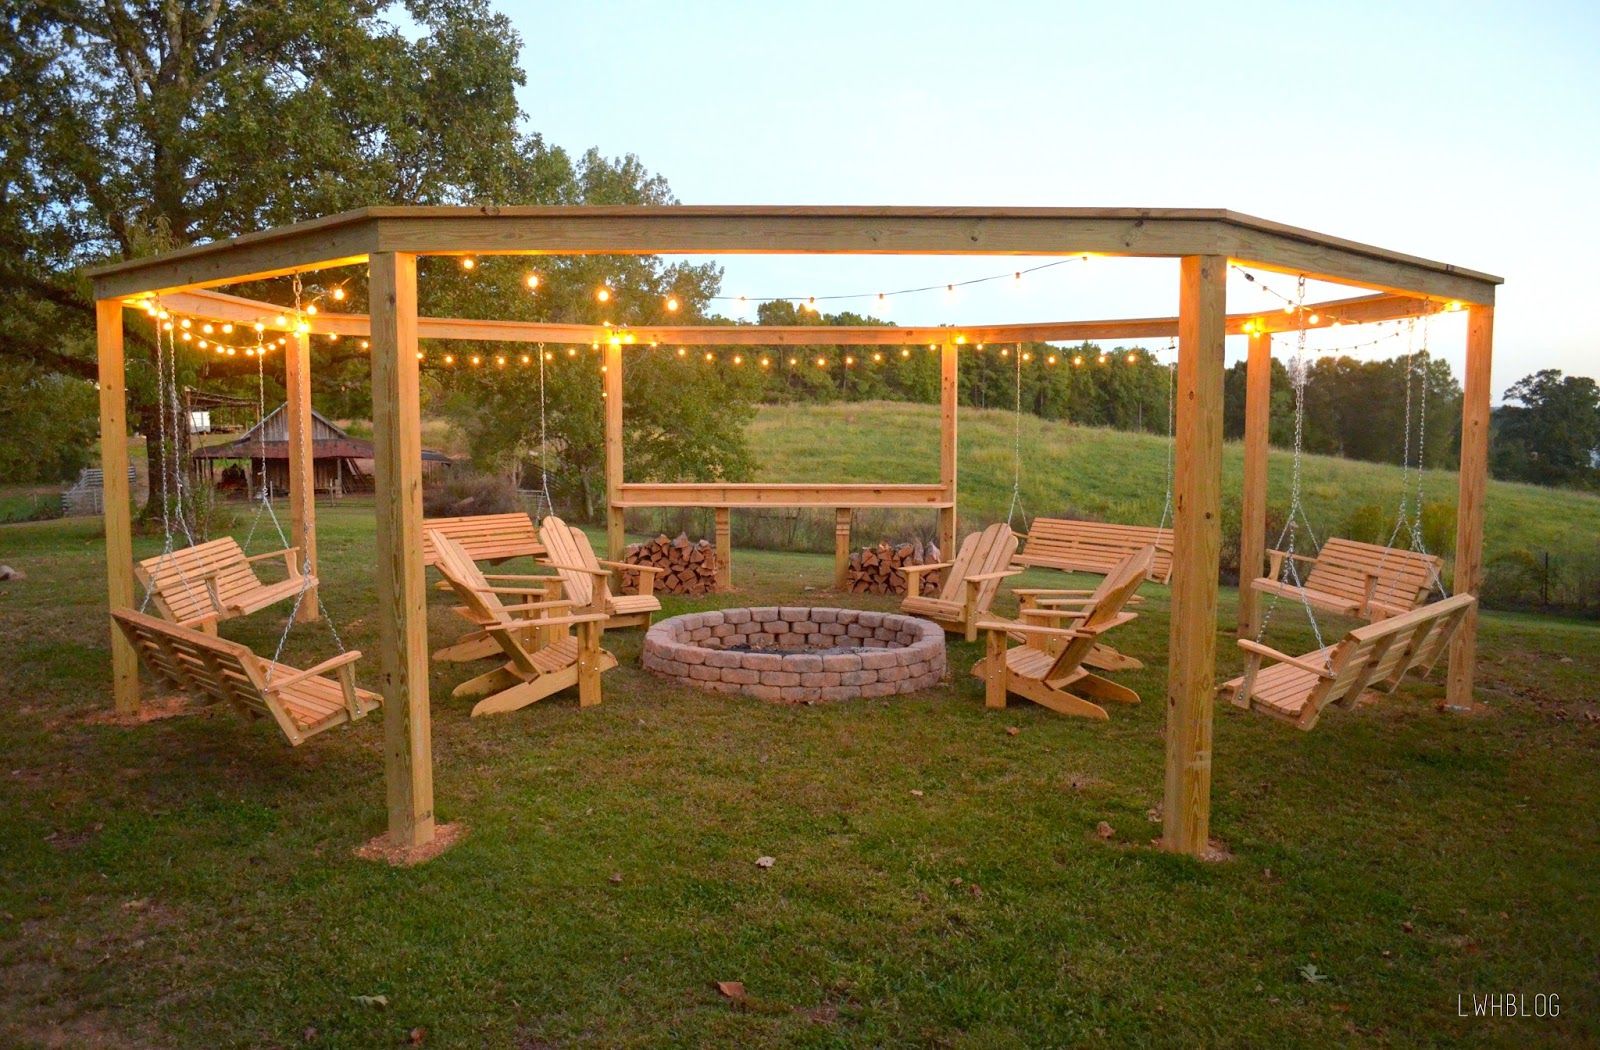 This DIY Backyard Pergola Is the Ultimate Summer Hangout Spot pic